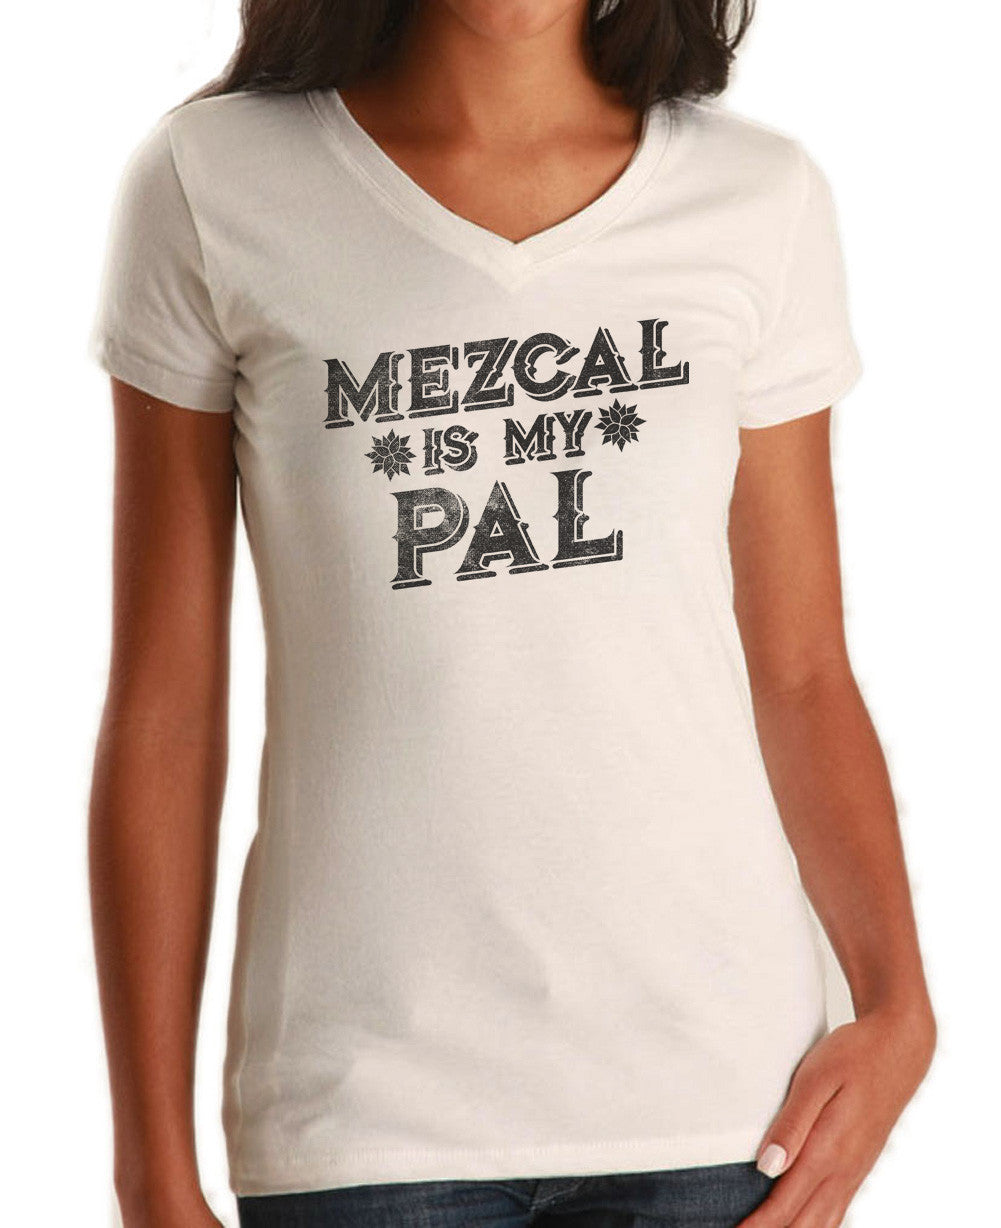 Women's Mezcal is My Pal Vneck T-Shirt - Cinco De Mayo Mexican Drinking